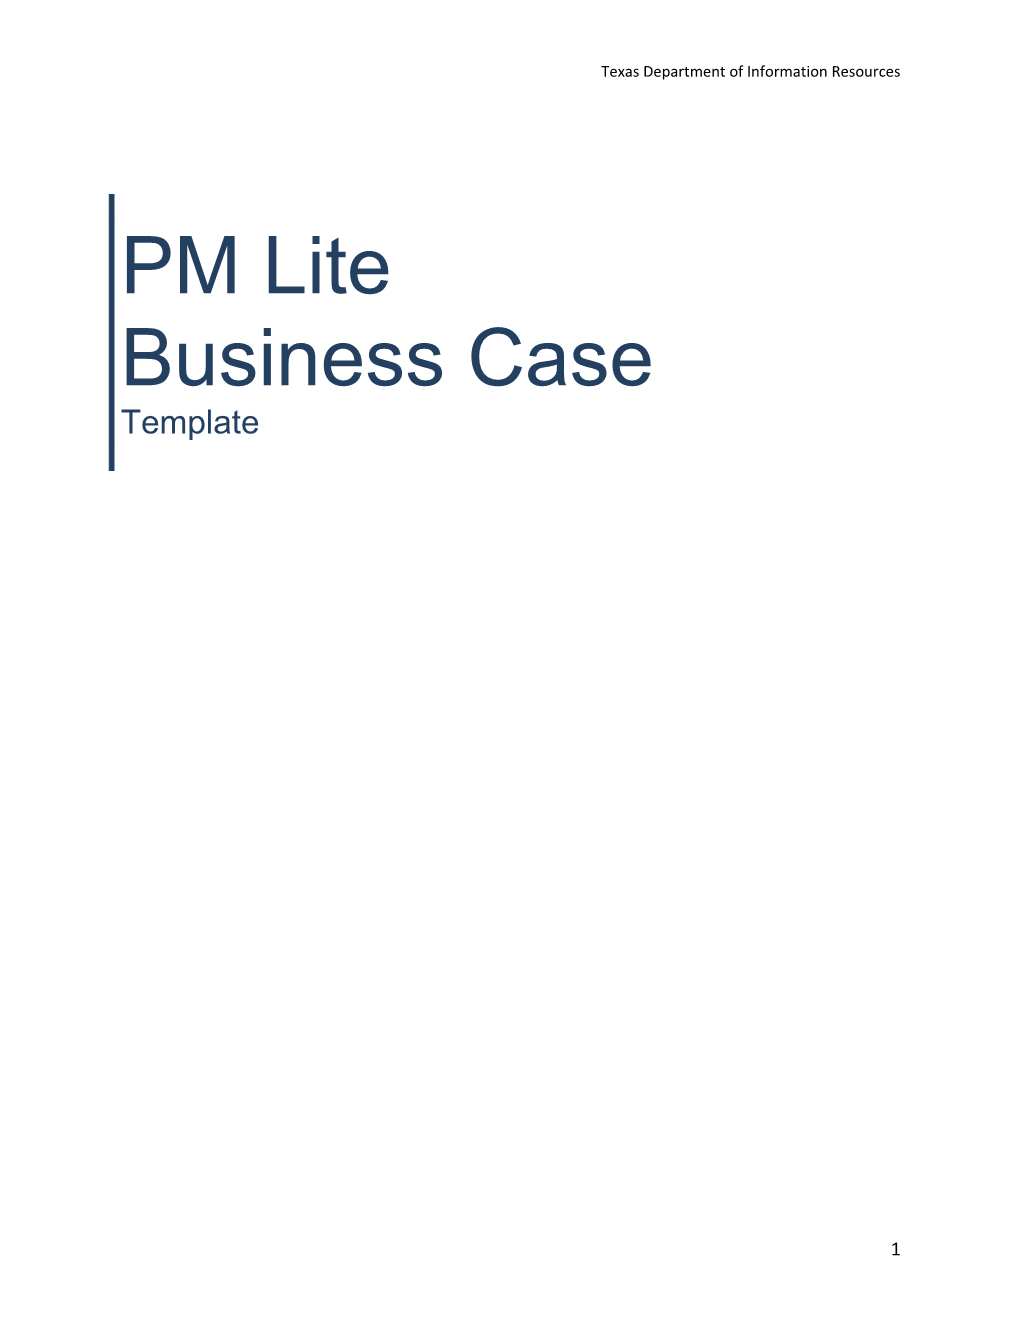 PM Lite Business Case Template